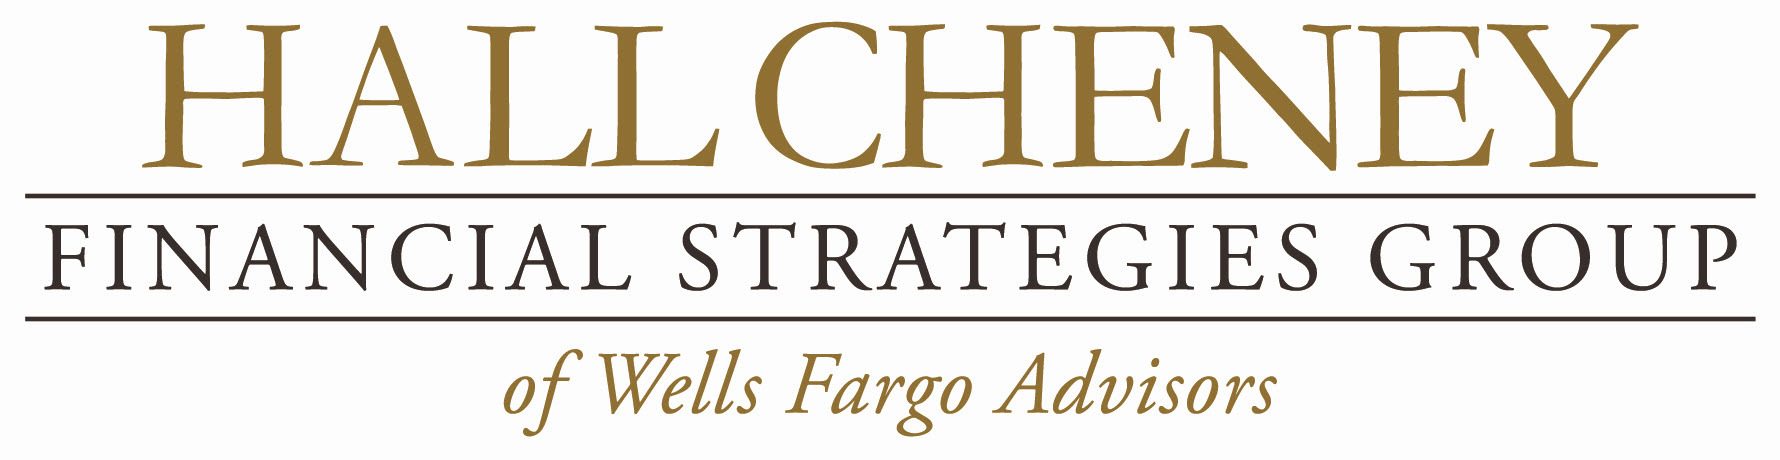 Hall Cheney Financial Strategies Group of Wells Fargo Advisors